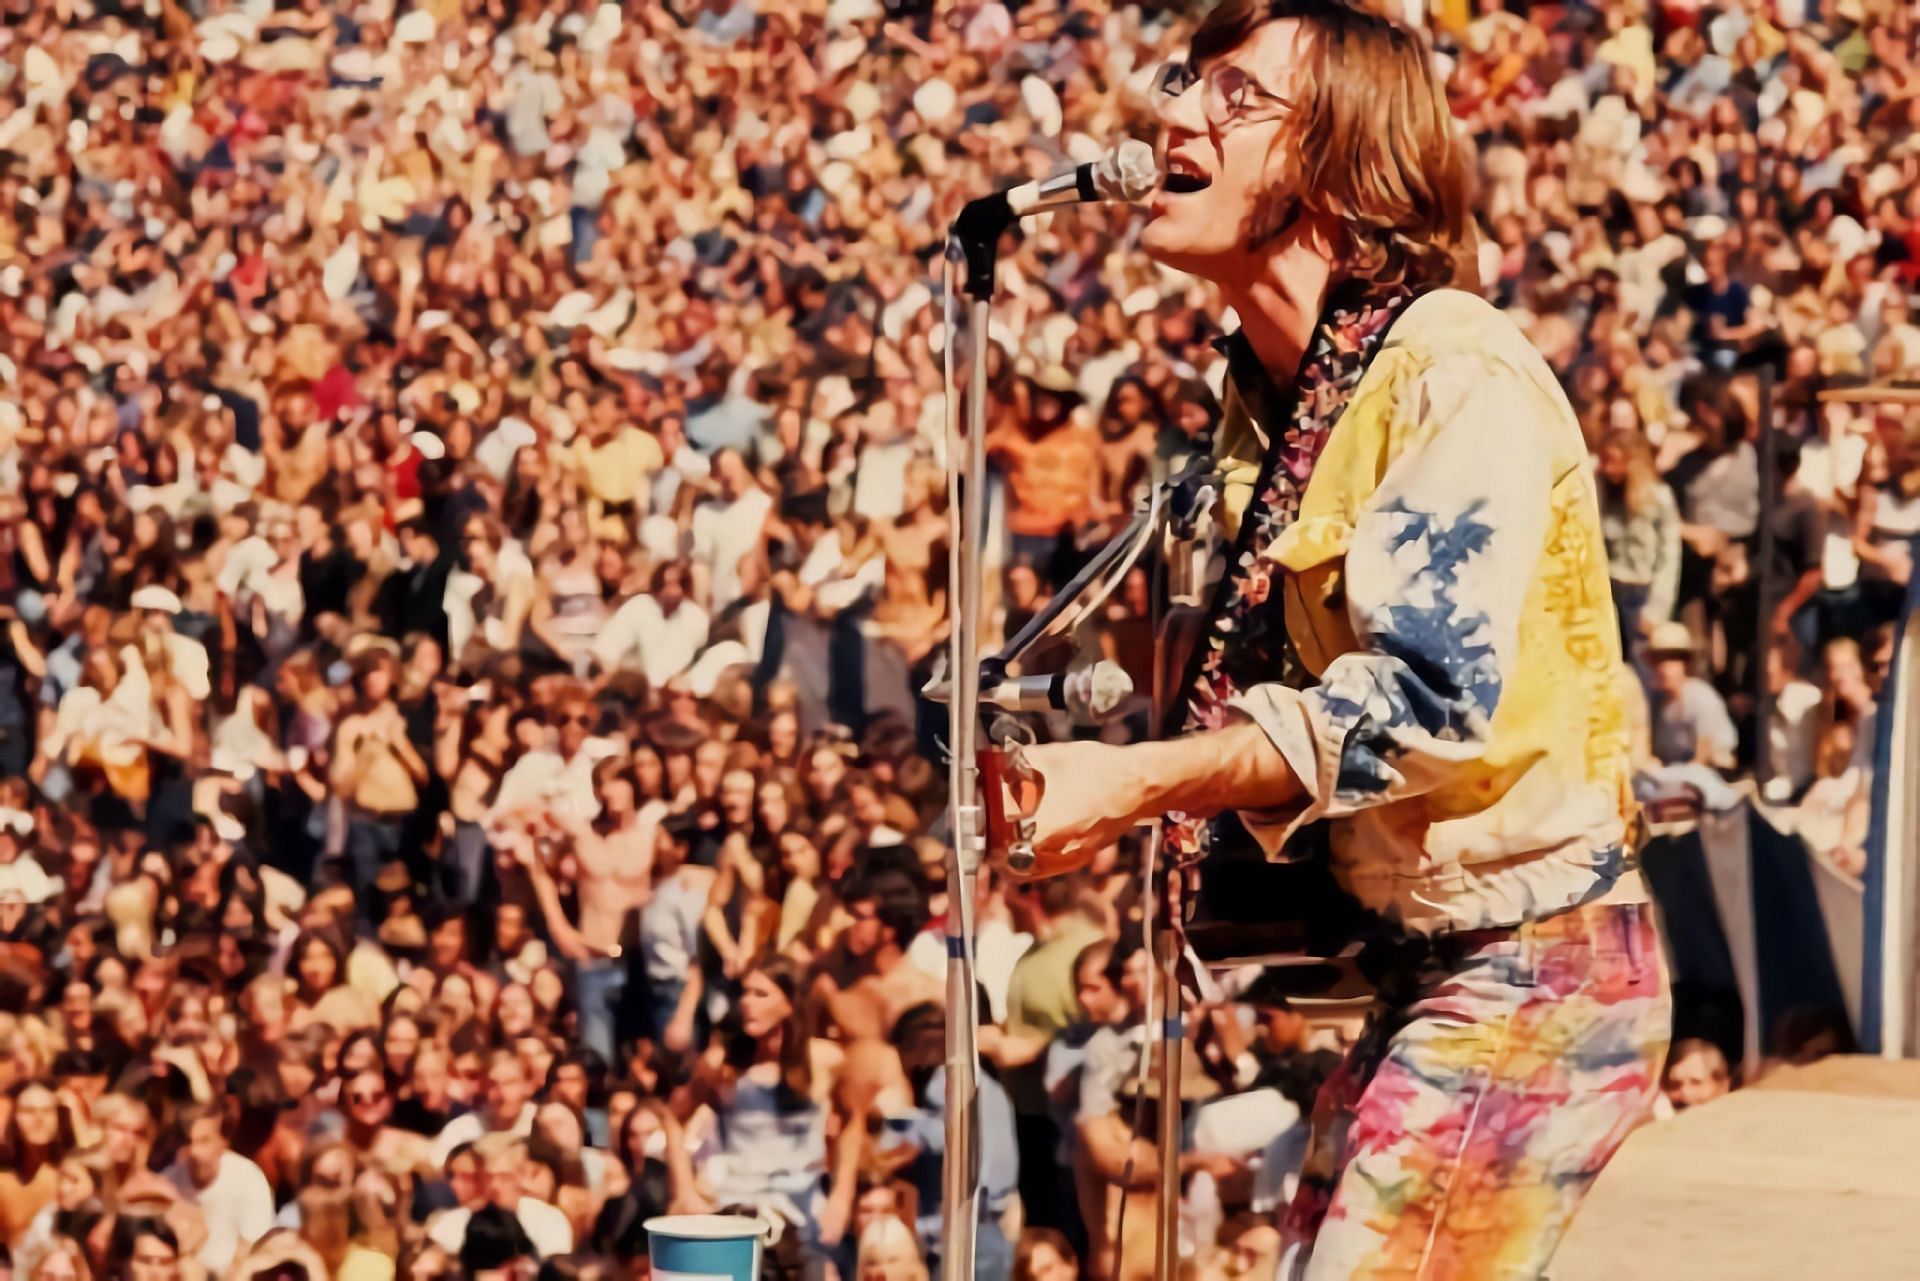 John Sebastian at Woodstock Festival, 1969 (Image via johnbsebastian.com)